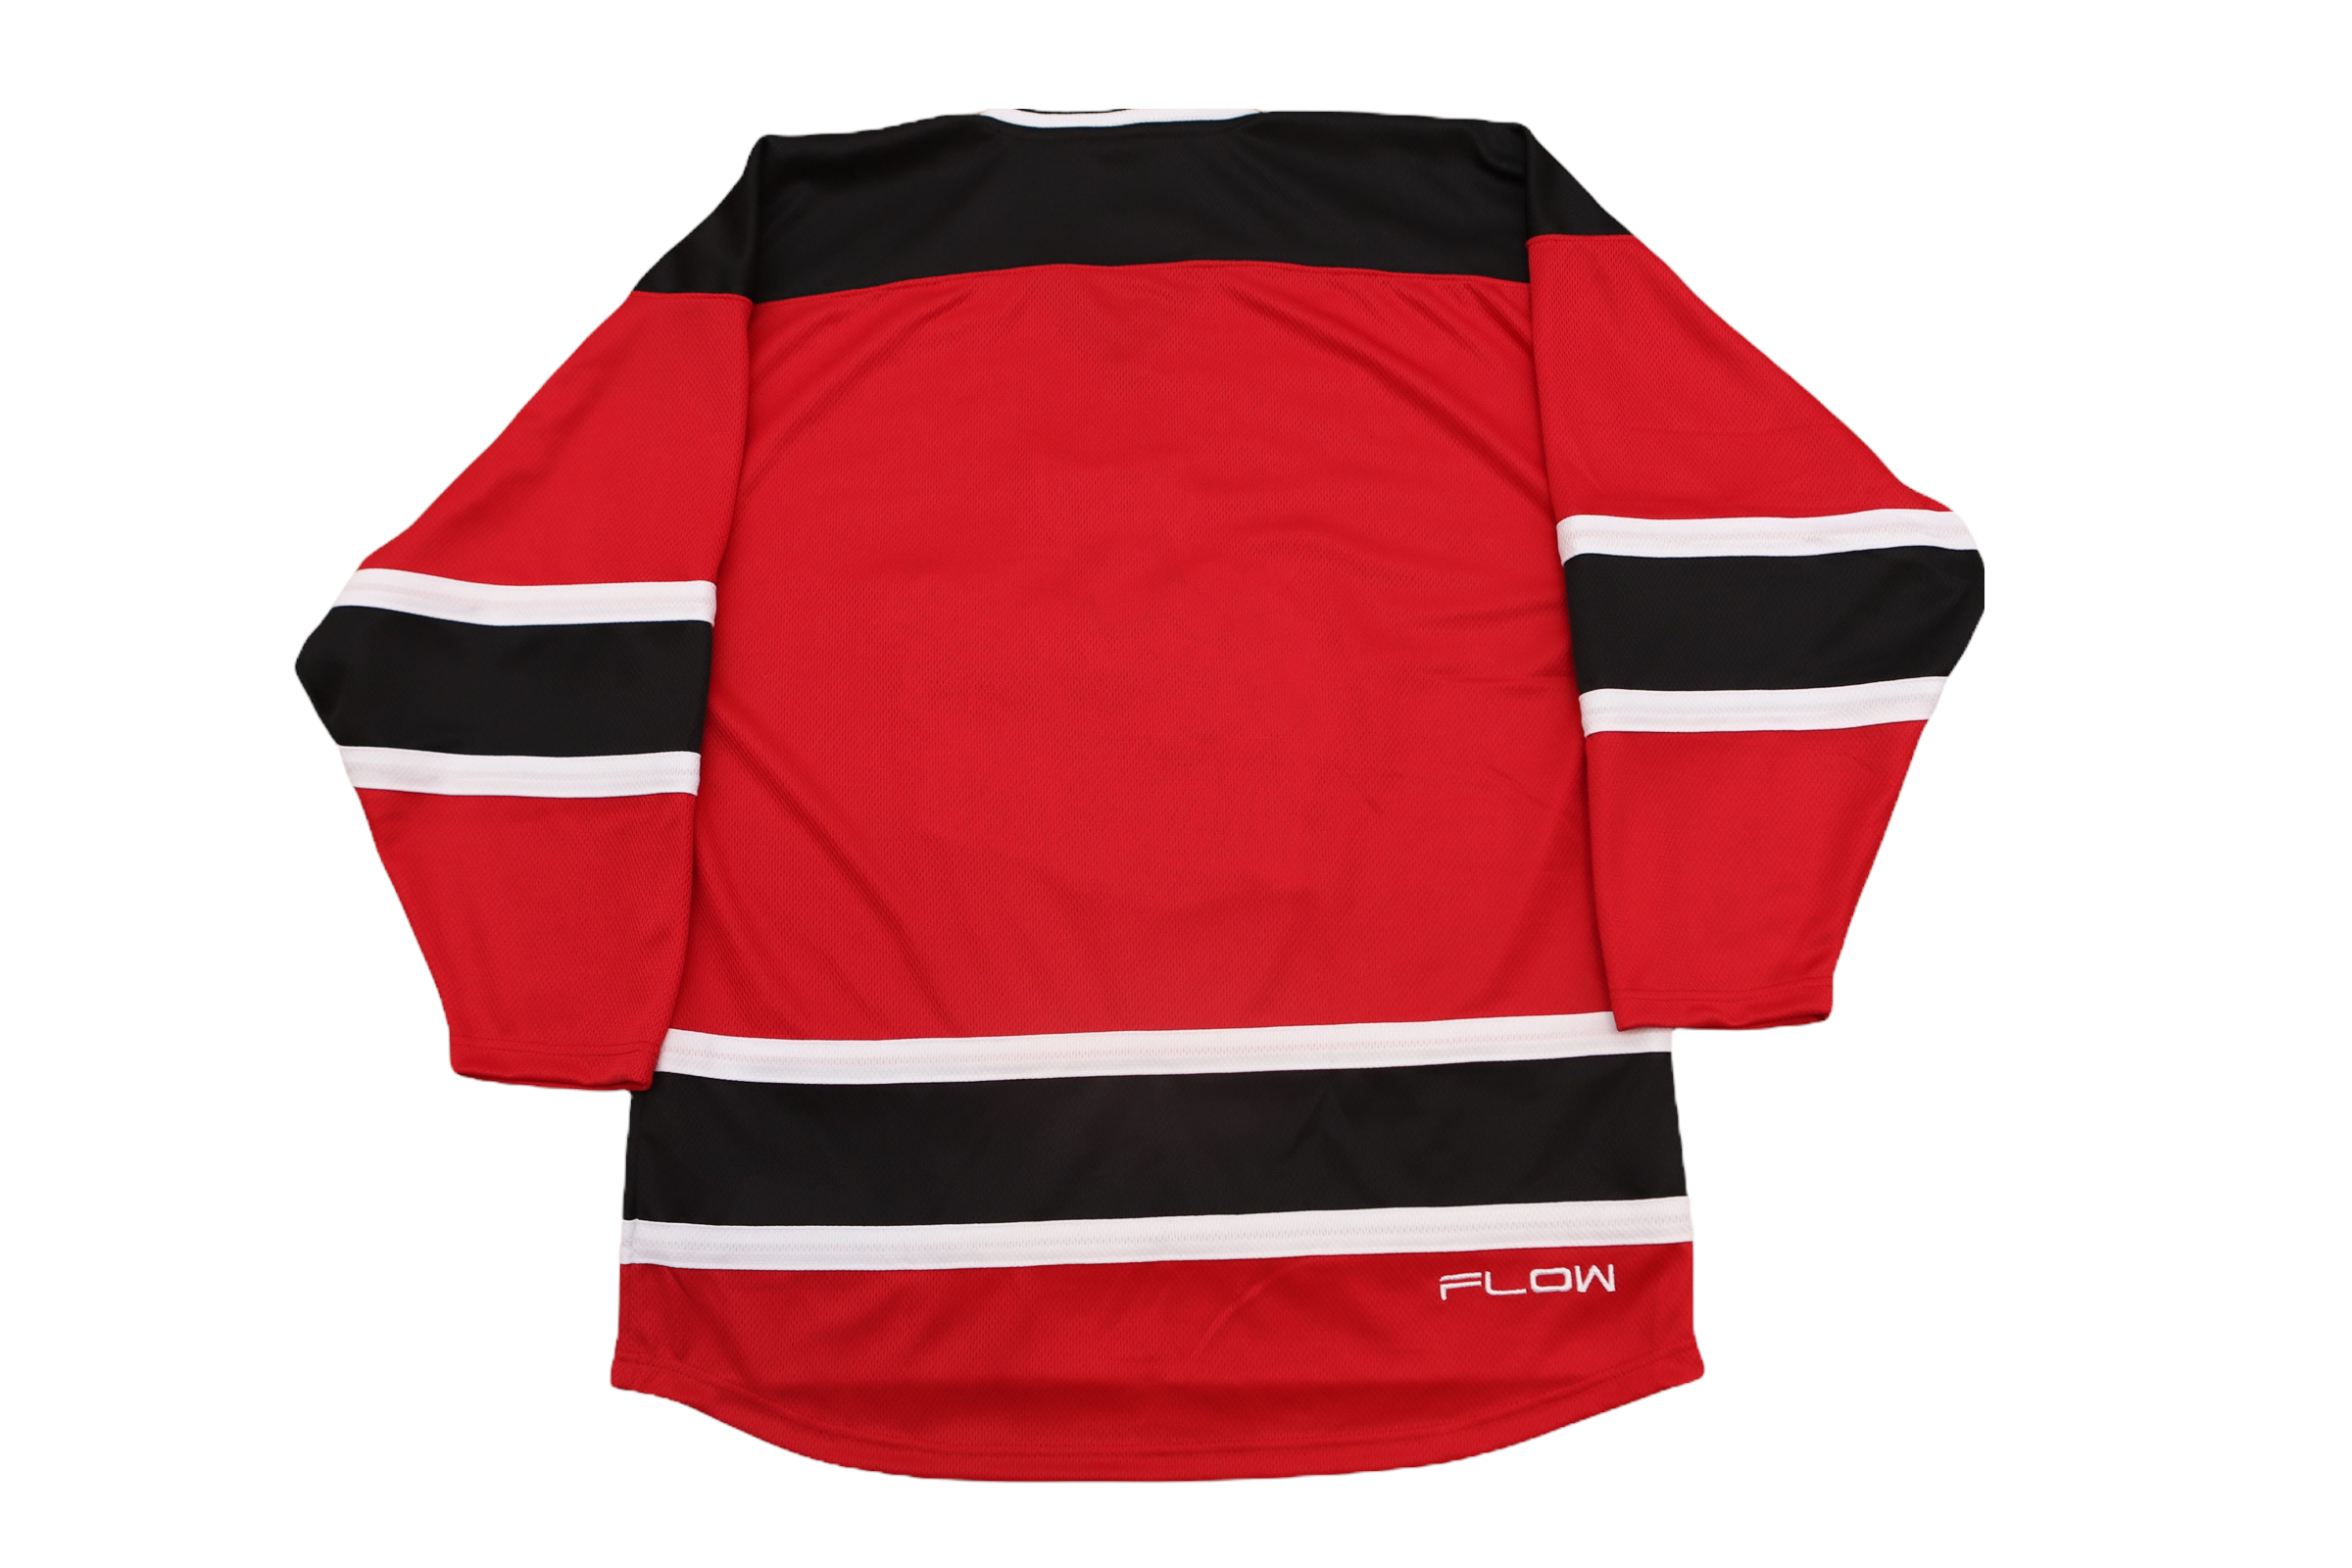 Limited Release Unisex Hockey Jersey - BlackSkullz Apparel